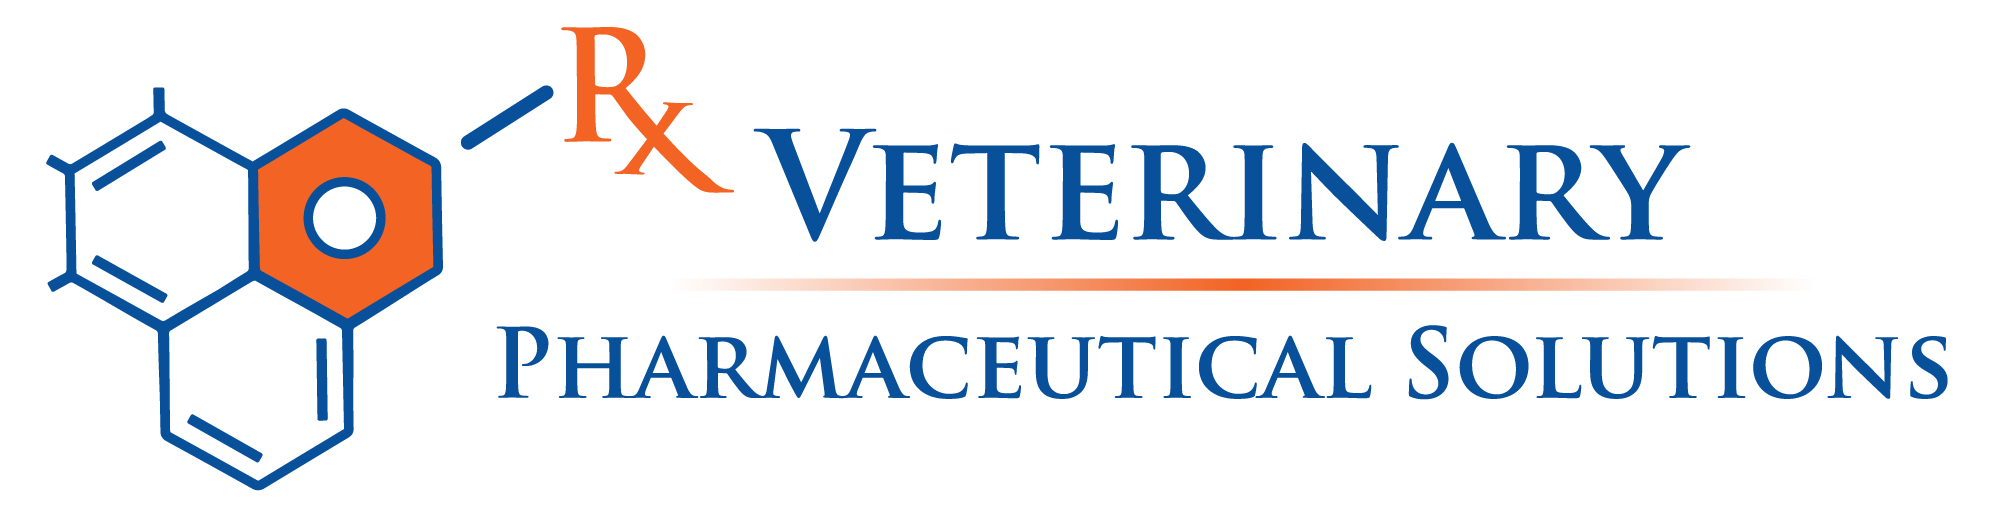 Veterinary Pharmaceutical Solutions